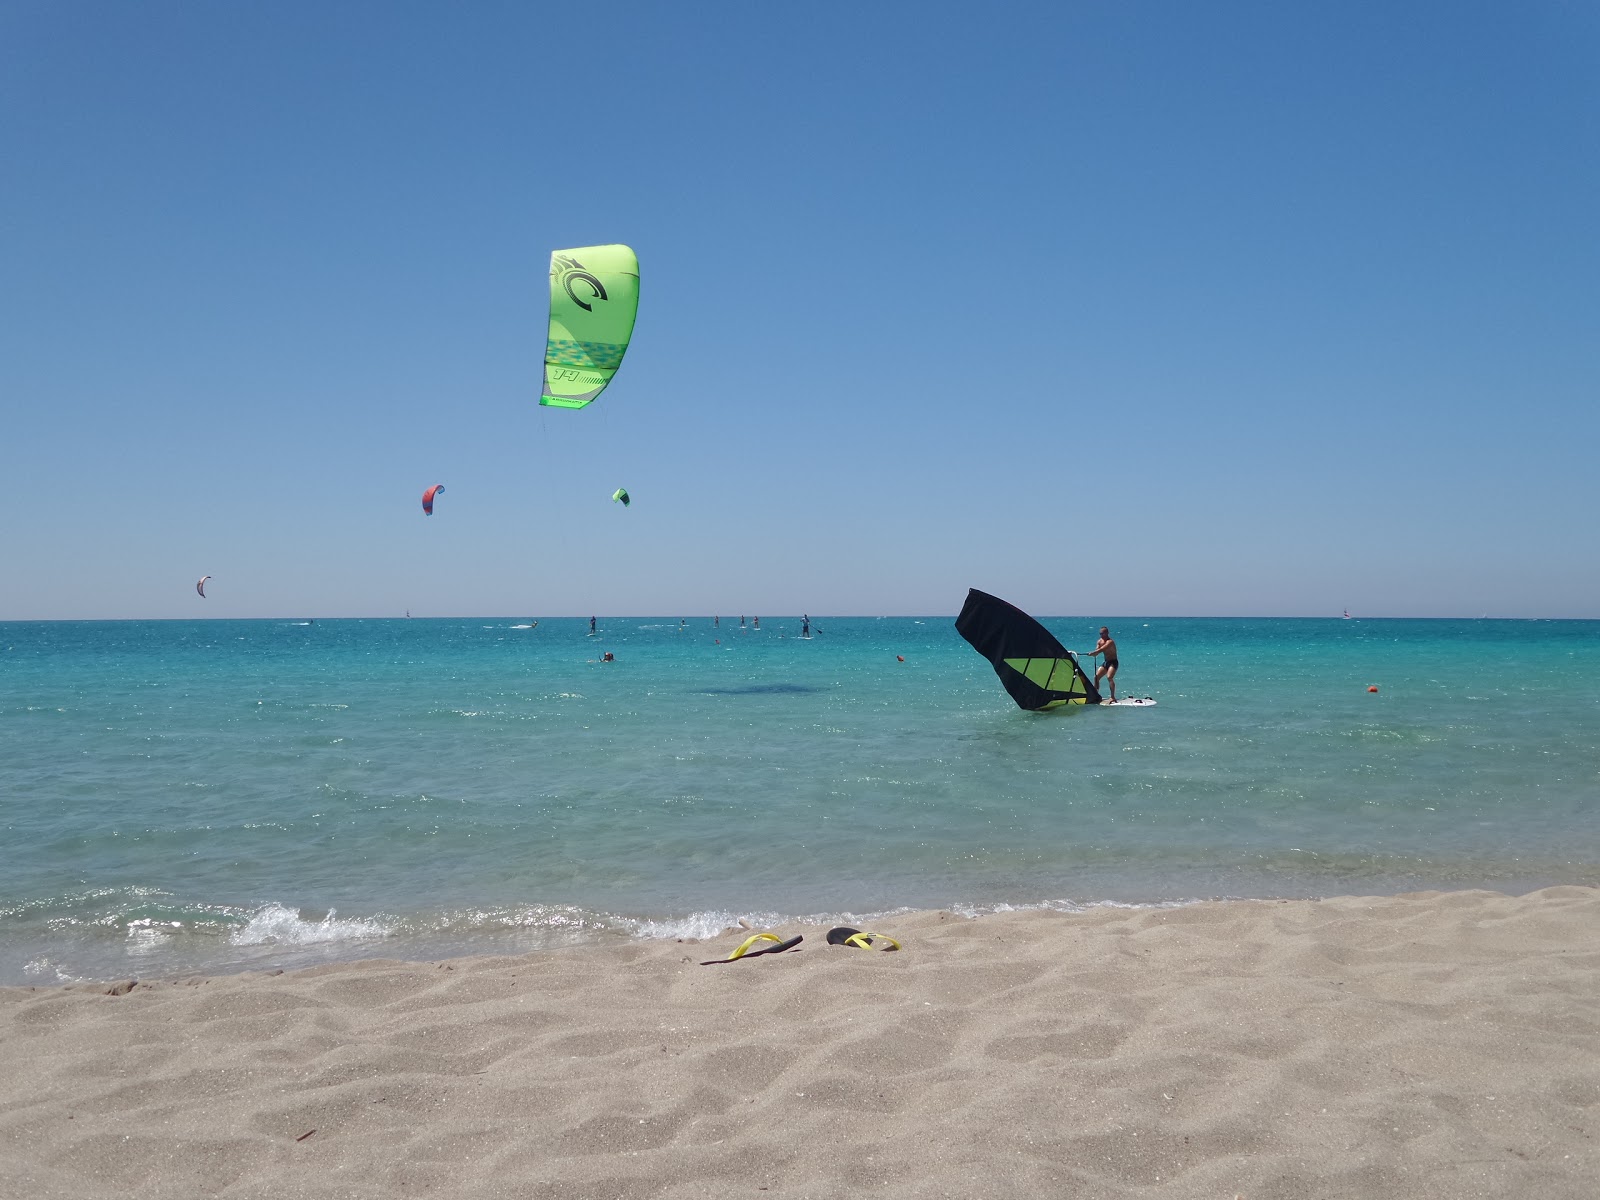 Spiaggia di Via G.Battista'in fotoğrafı mavi saf su yüzey ile